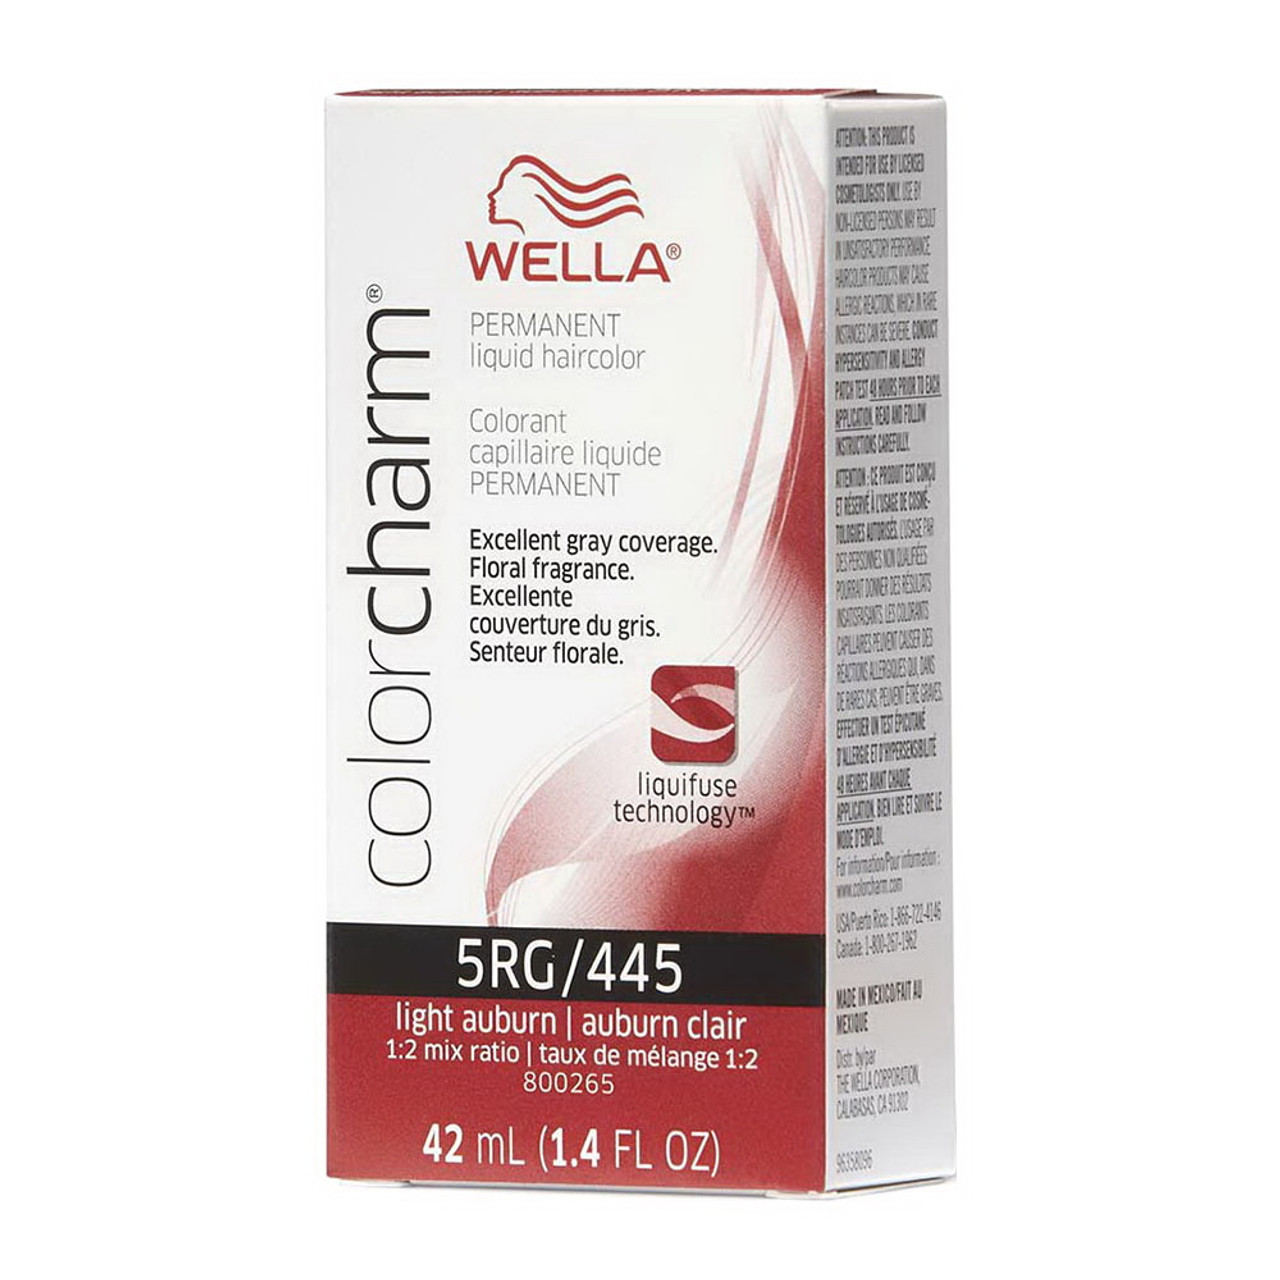 Wella ColorCharm 5RG 445 Permanent Liquid Hair Color, Light Auburn, 1.4 Oz